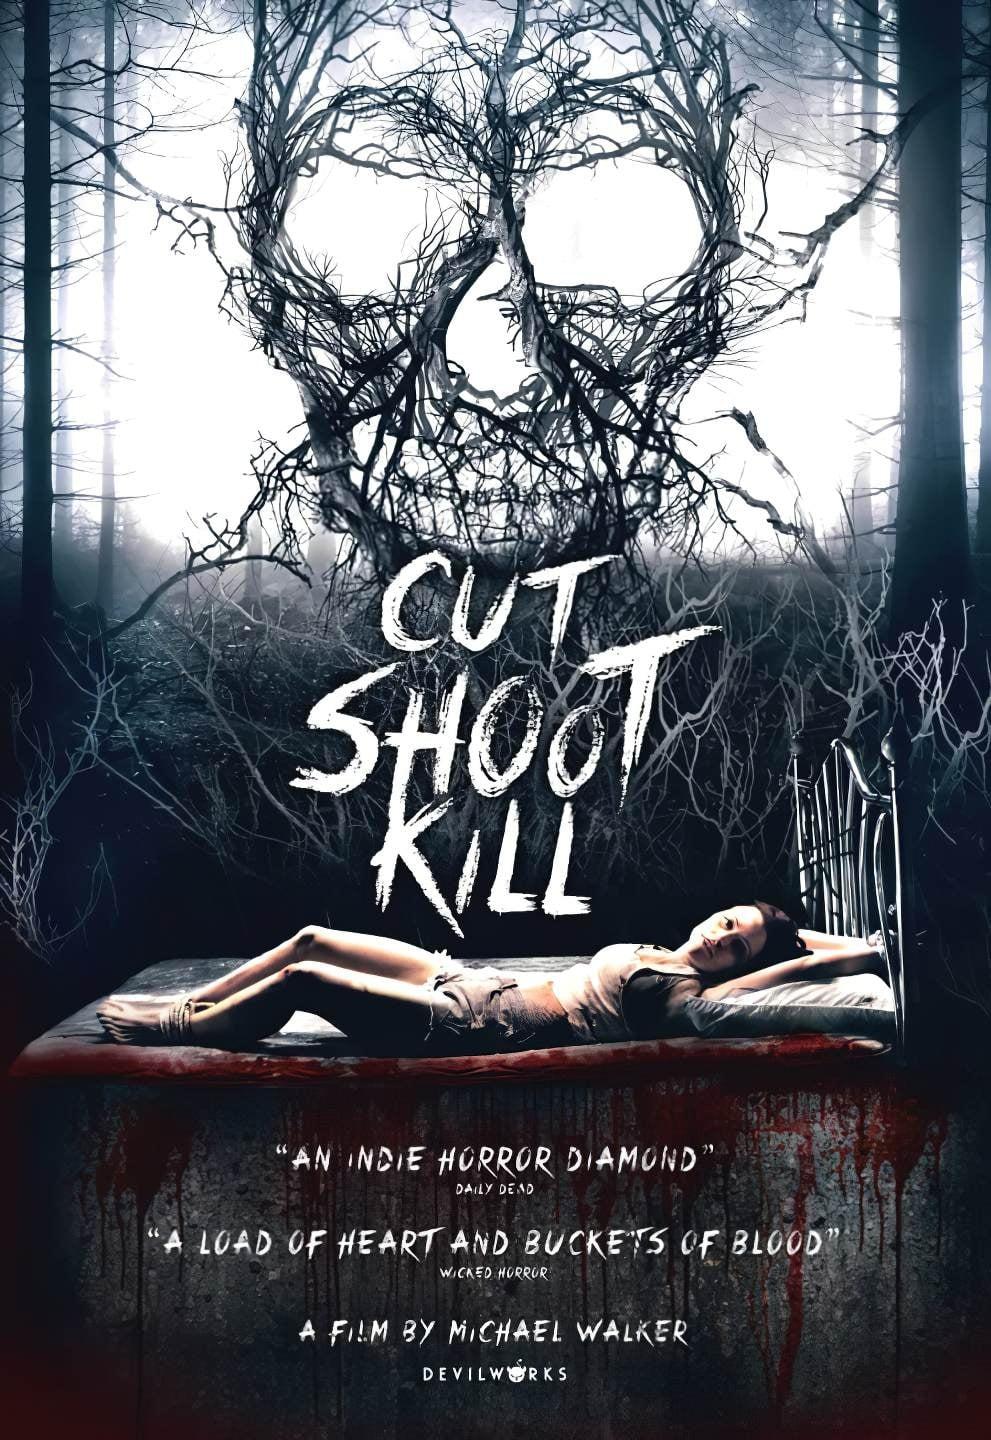 Cut Shoot Kill poster